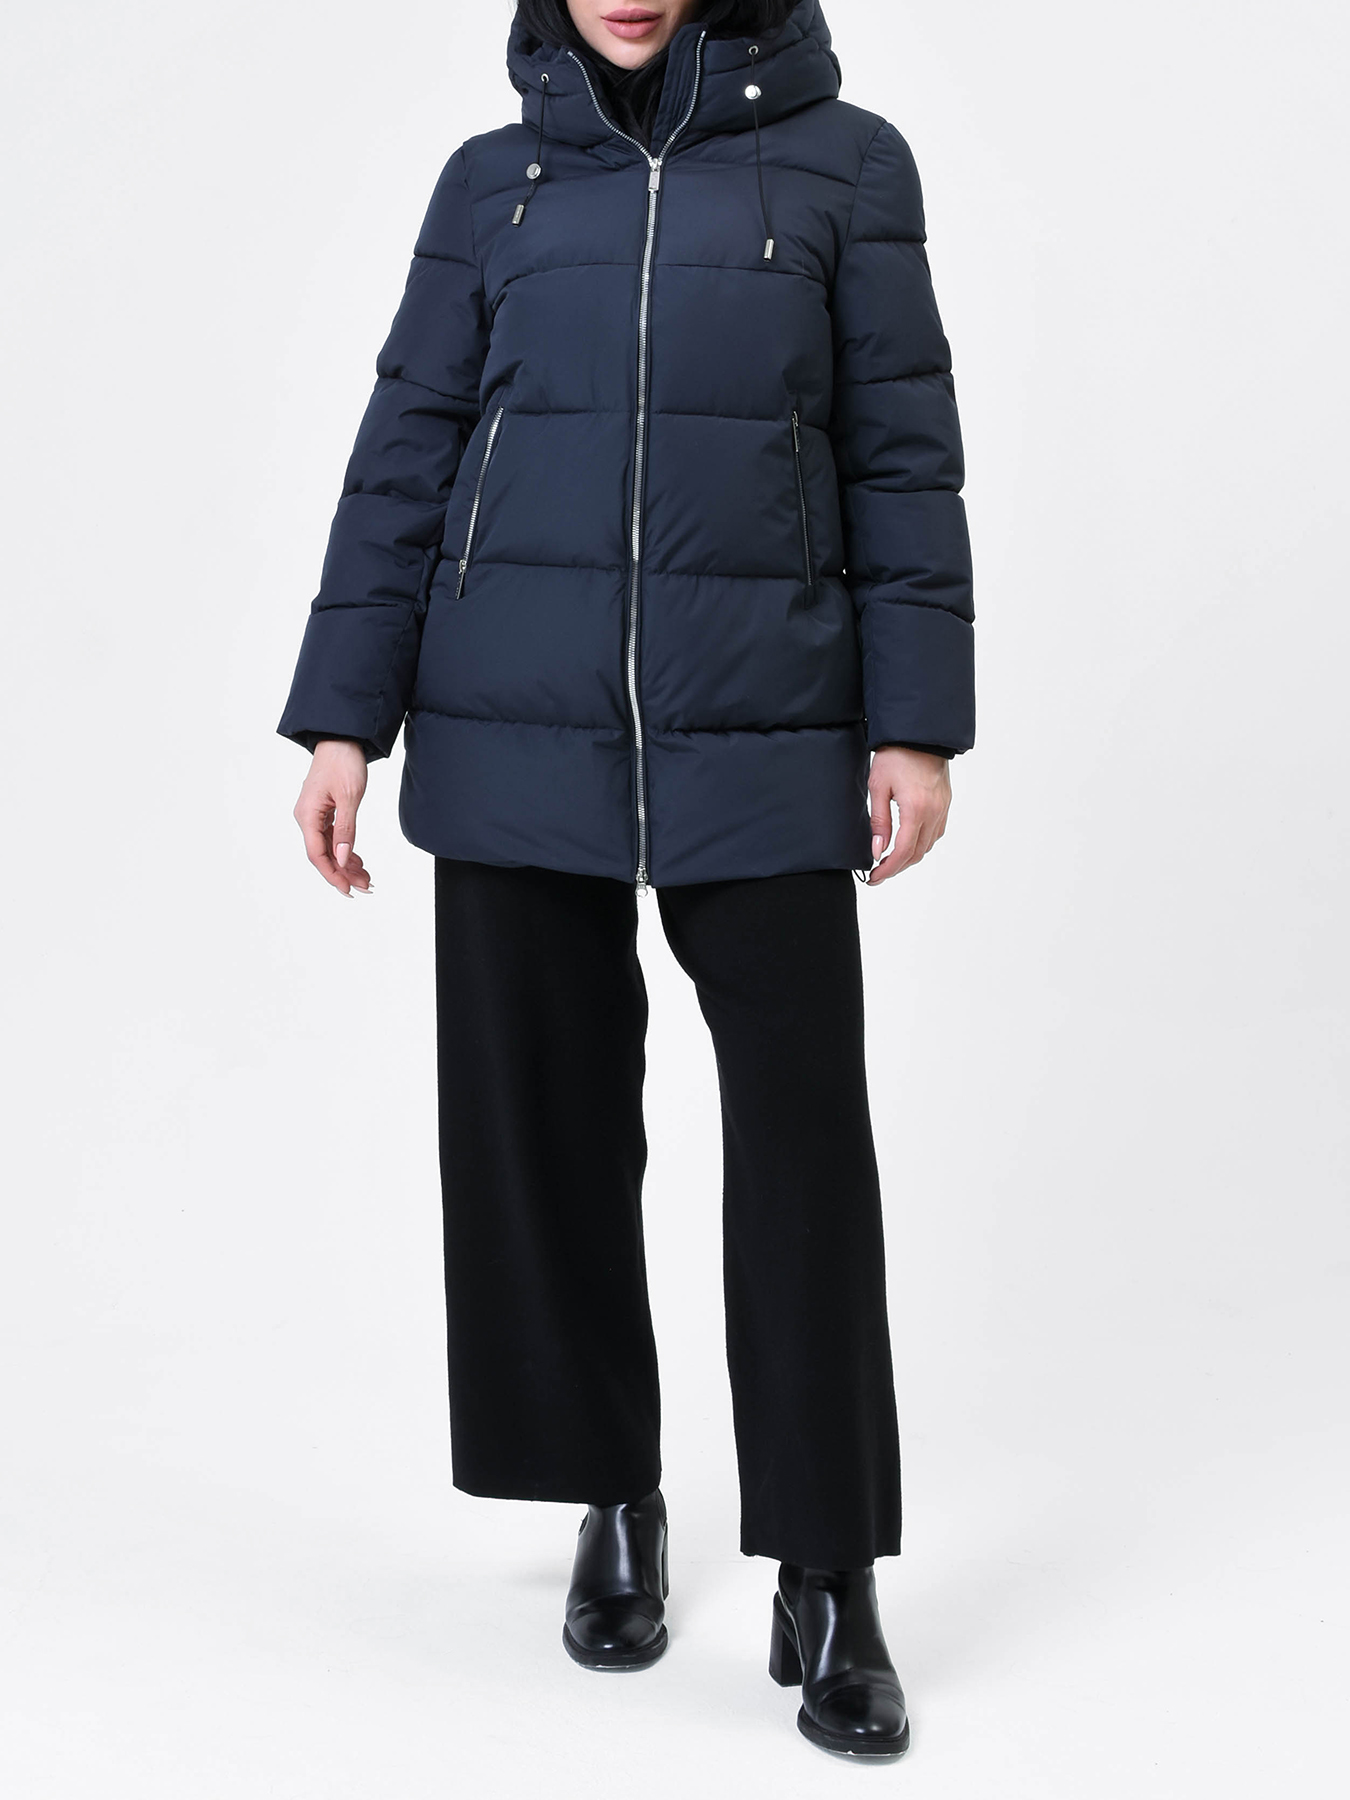 Пальто зимнее Maritta 433612-021, цвет темно-синий, размер 46 - фото 4